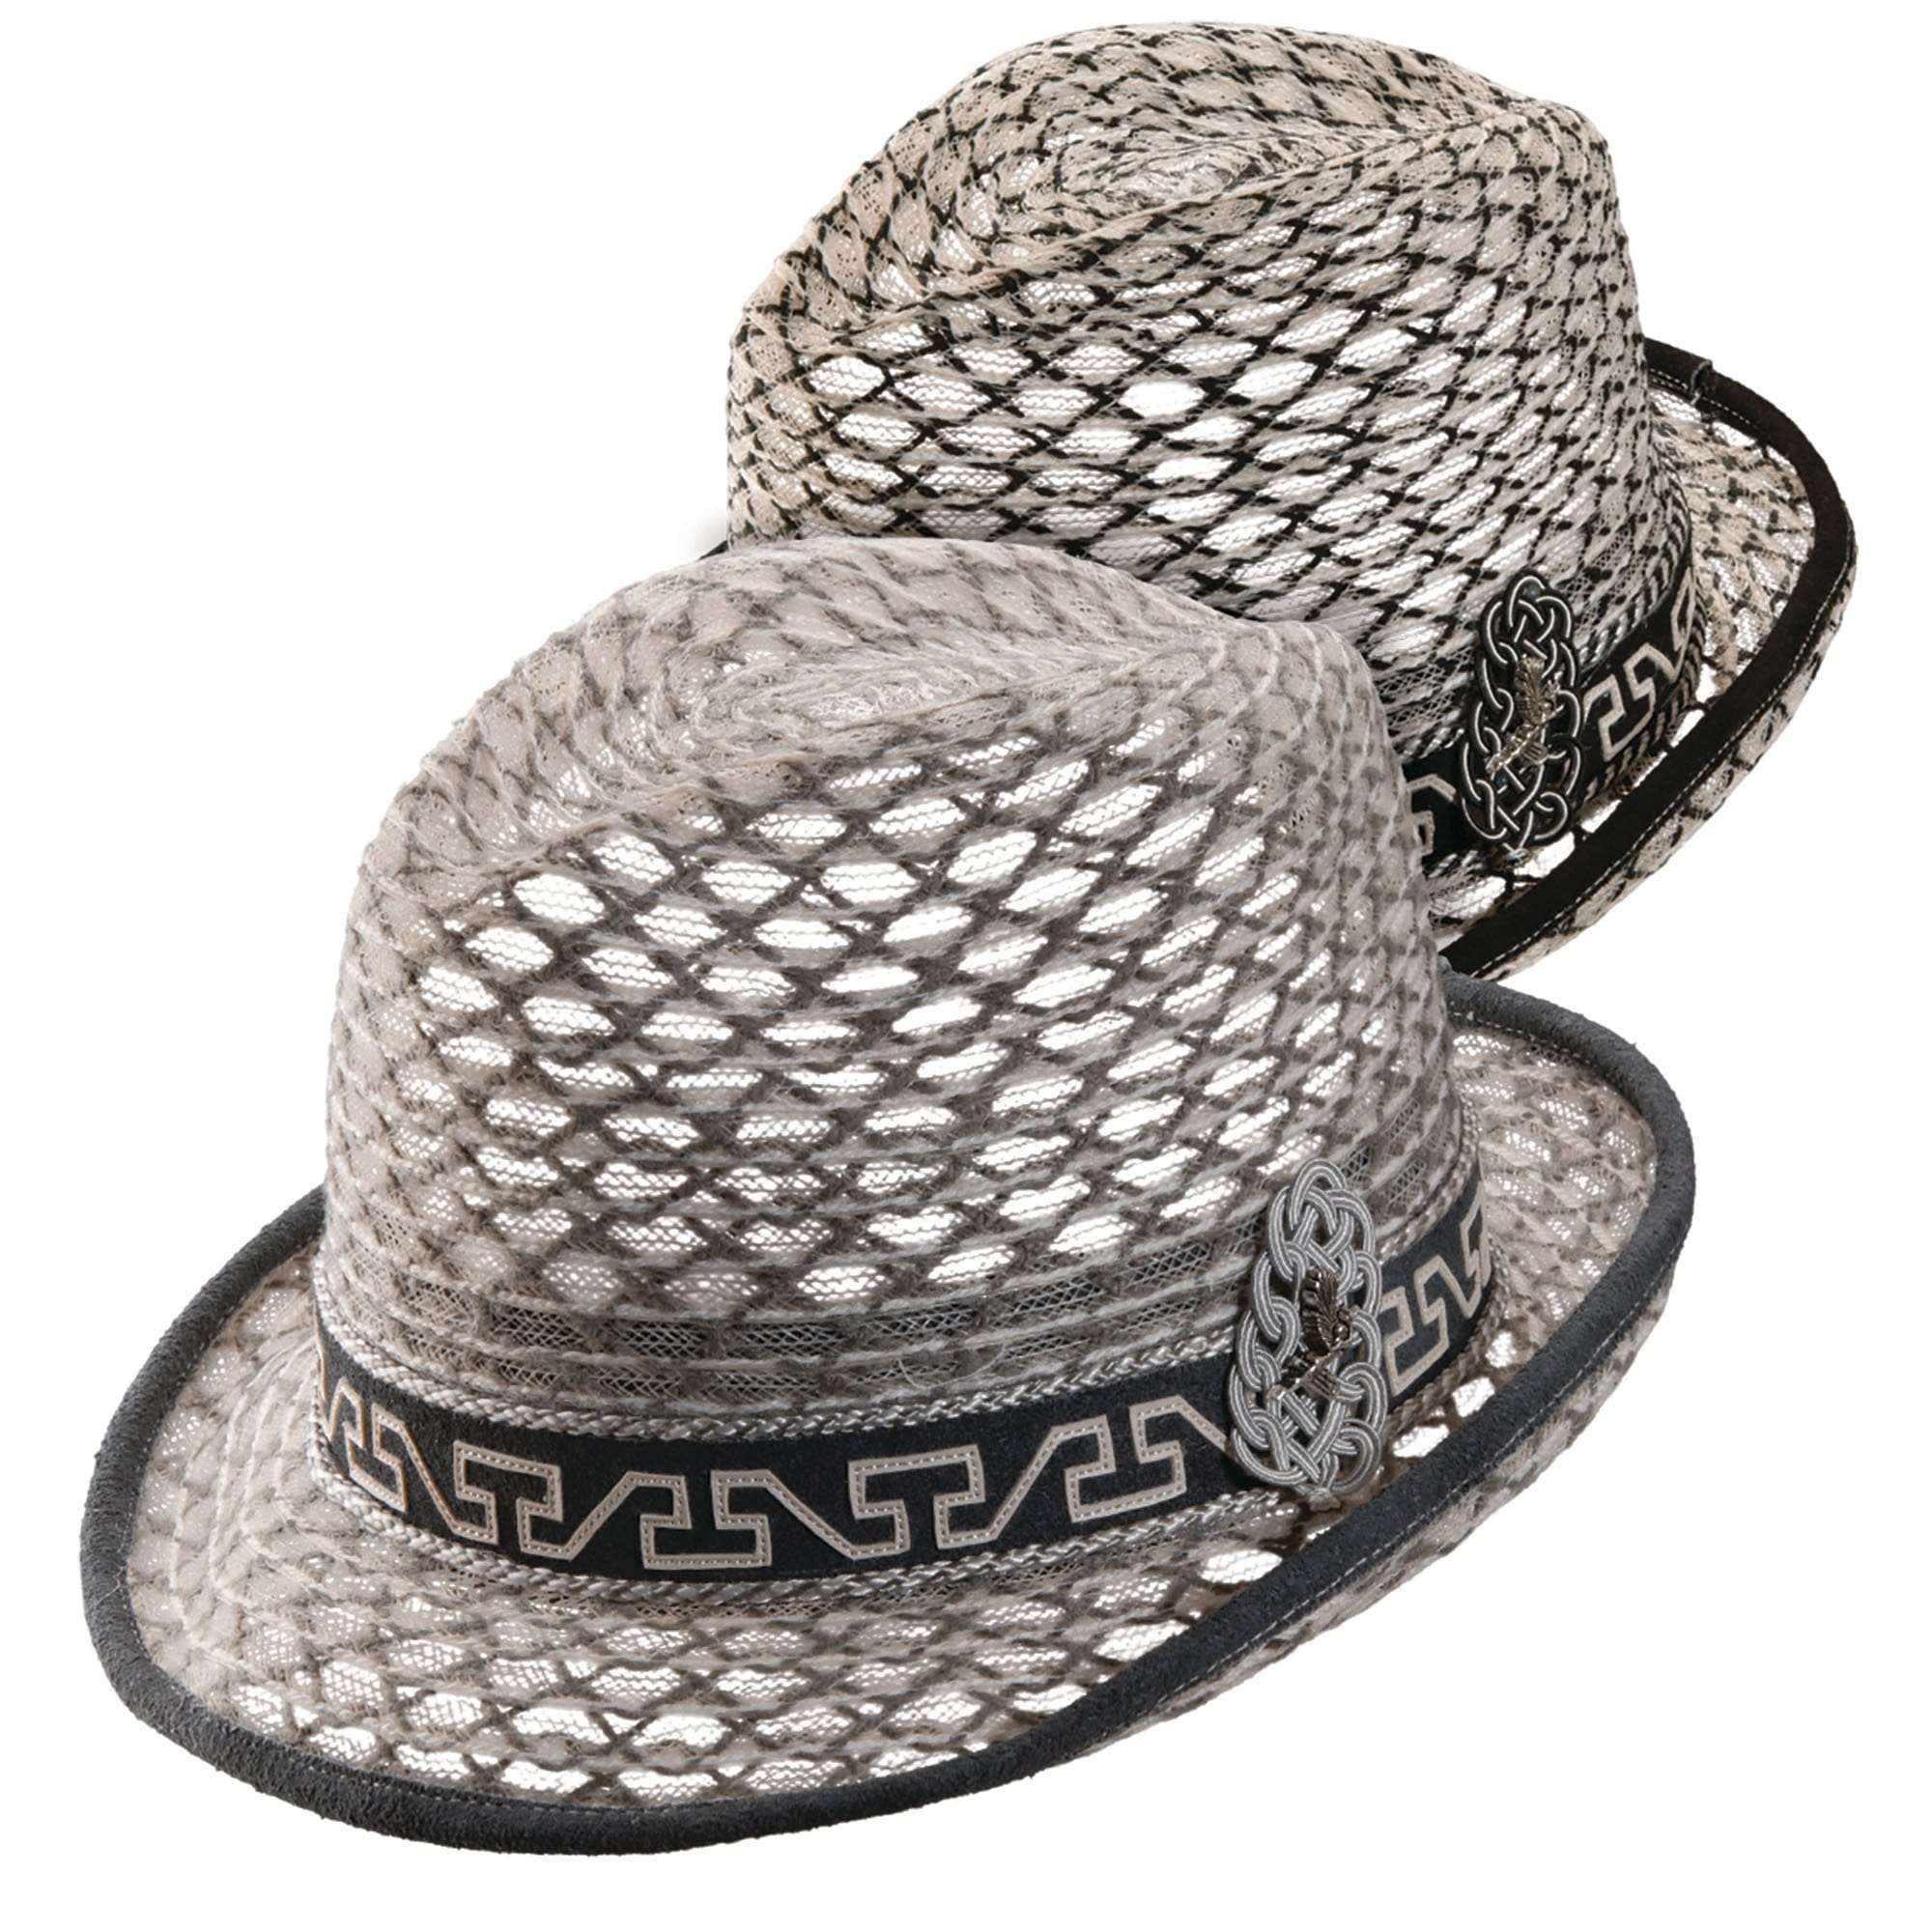 Carlos Santana Threaded Braid Fedora Hat Fedora Hat Santana Hats MSsan132M Black and White M 